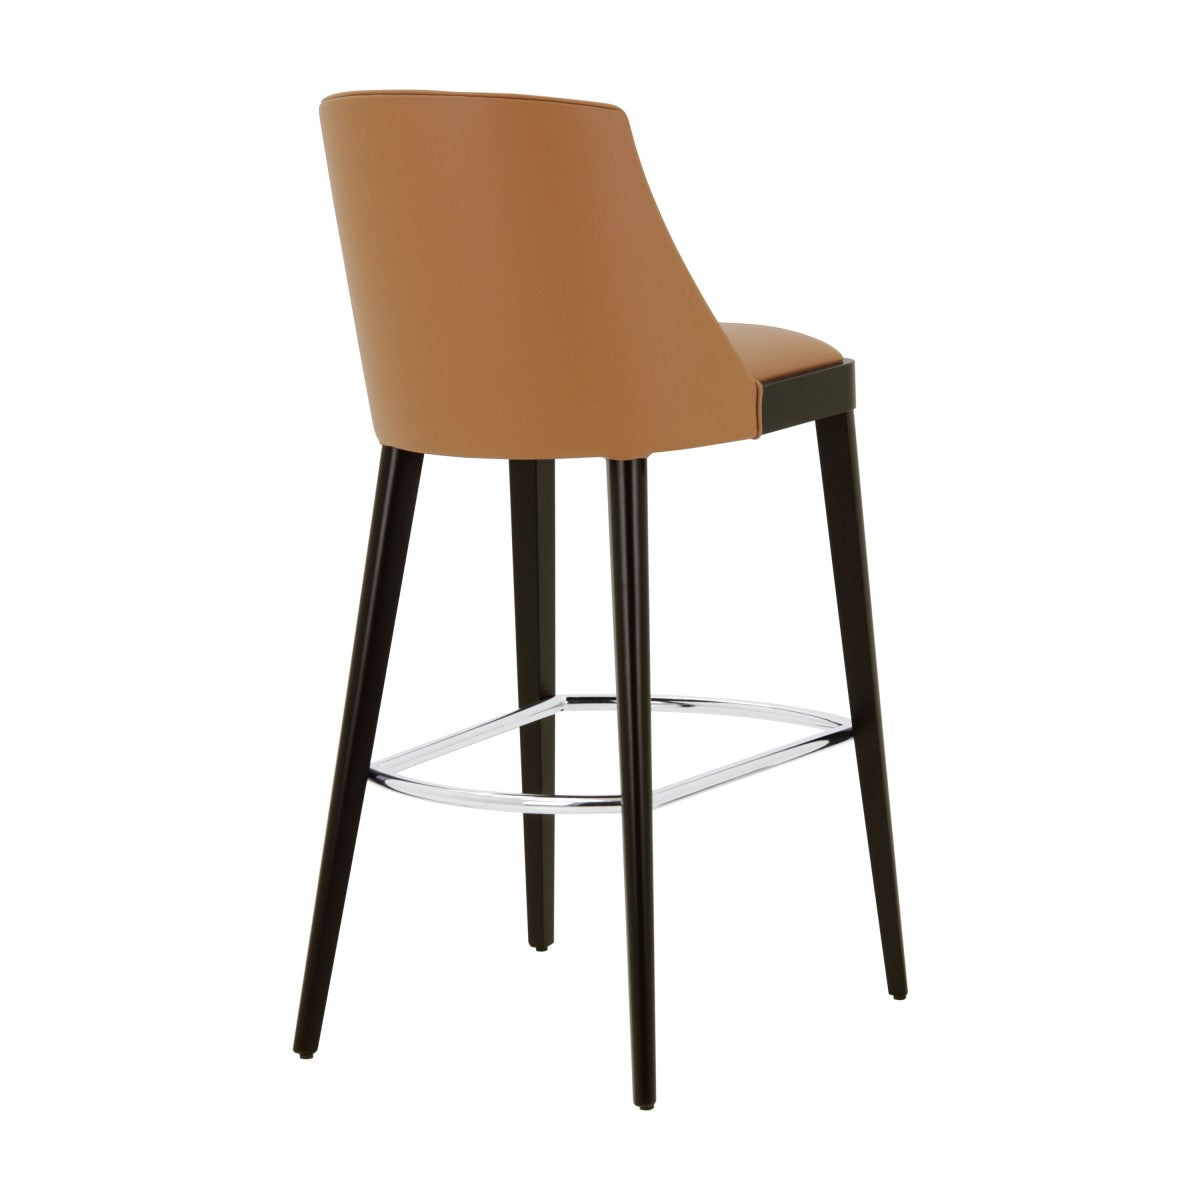 Svezia Bespoke Upholstered Contemporary Kitchen Barstool MS326B Custom Made To Order